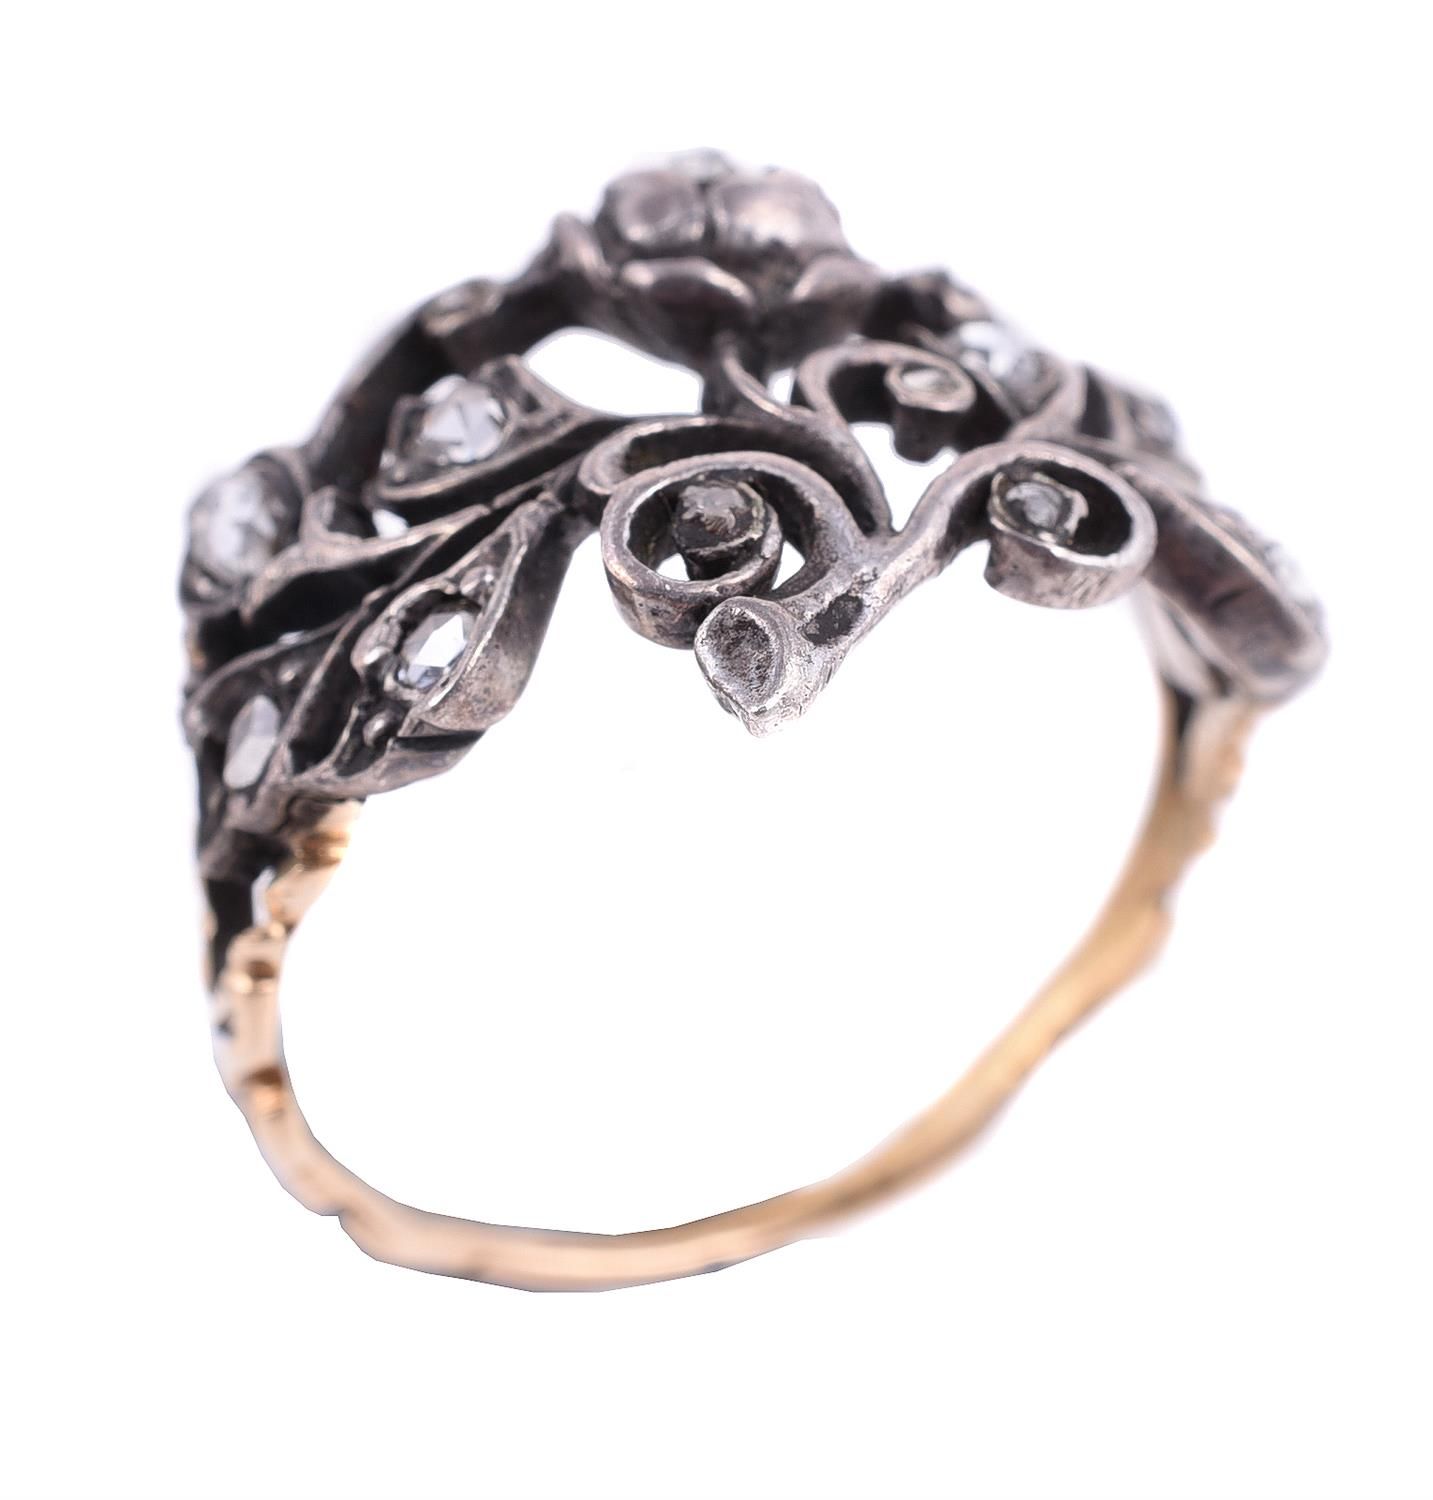 An early 20th century diamond giardinetti ring Un anello di diamanti giardinetti&hellip;